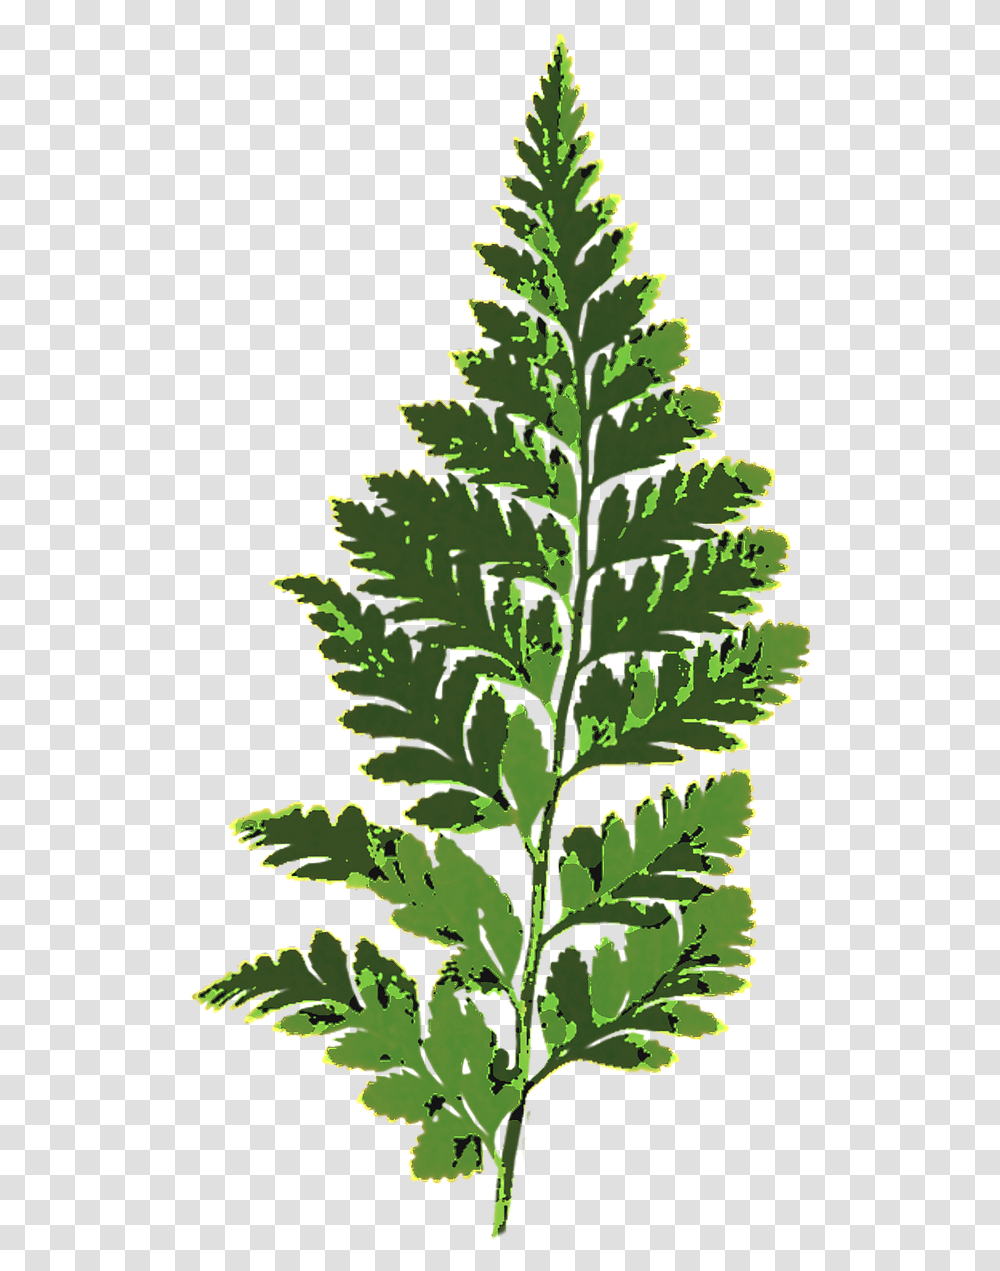 Nonvascular Plants On Clipart, Leaf, Tree, Jar, Fern Transparent Png